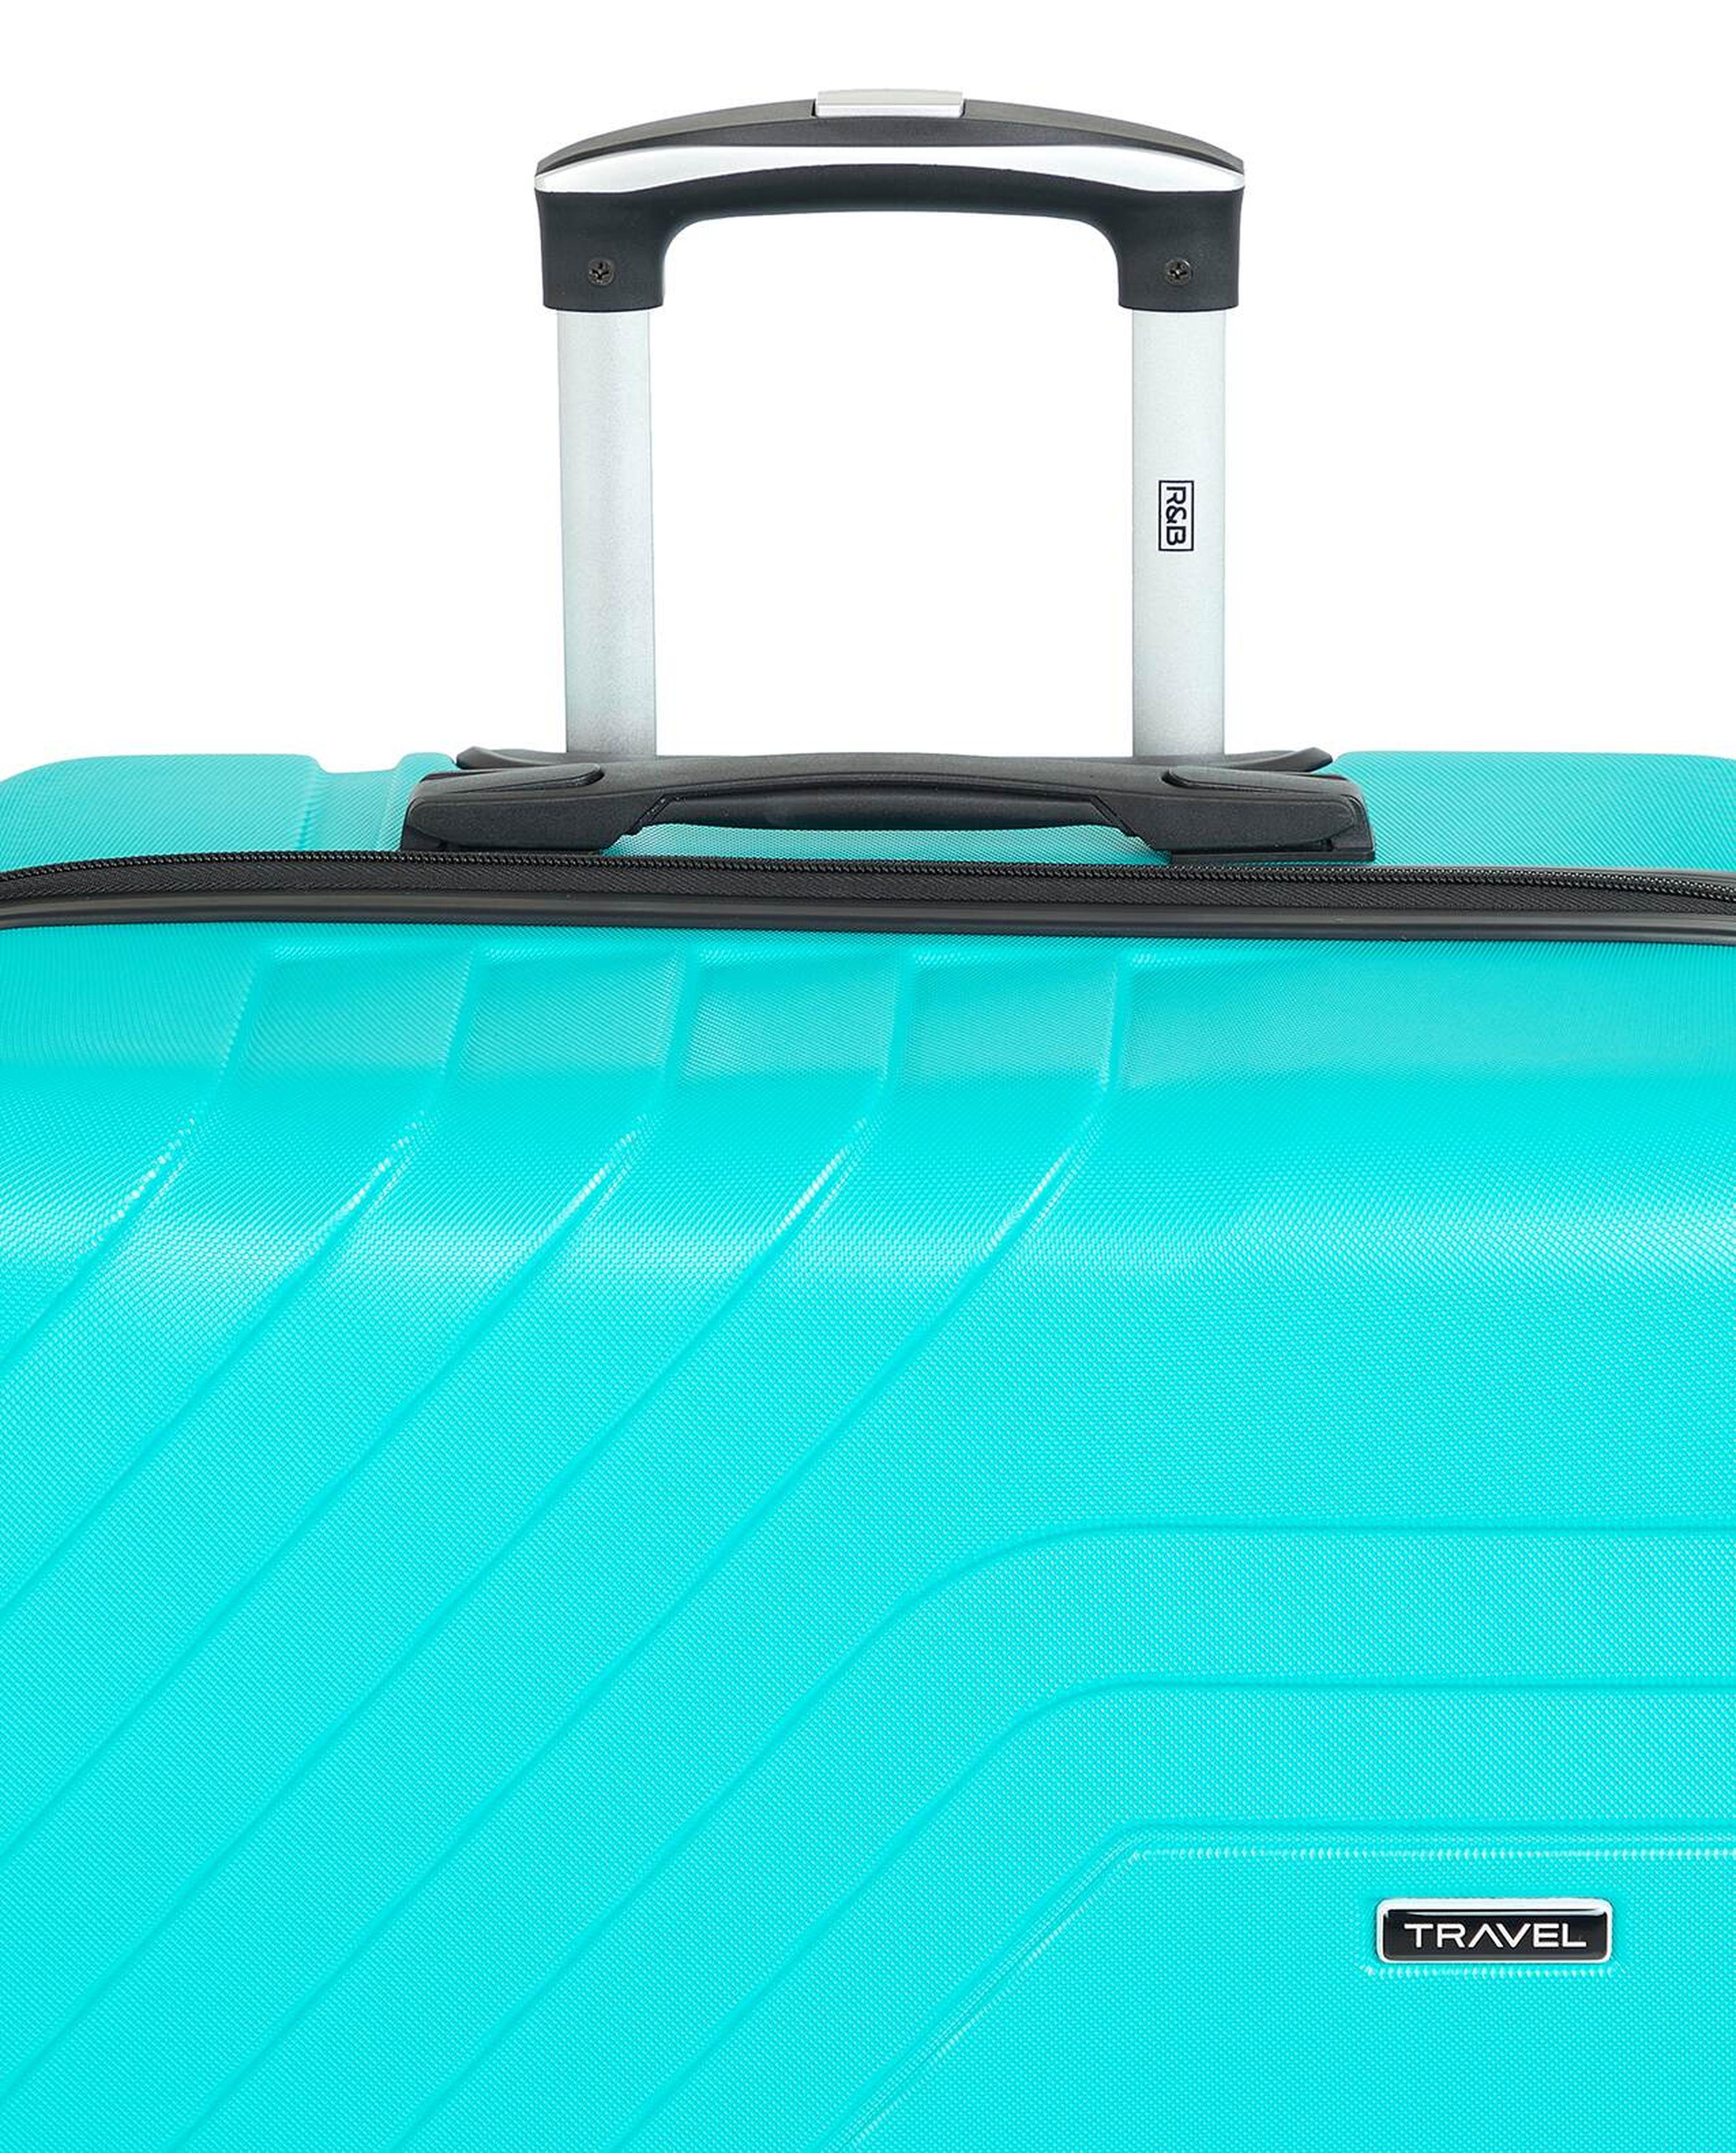 Hardshell Luggage Trolley| 32 Inch